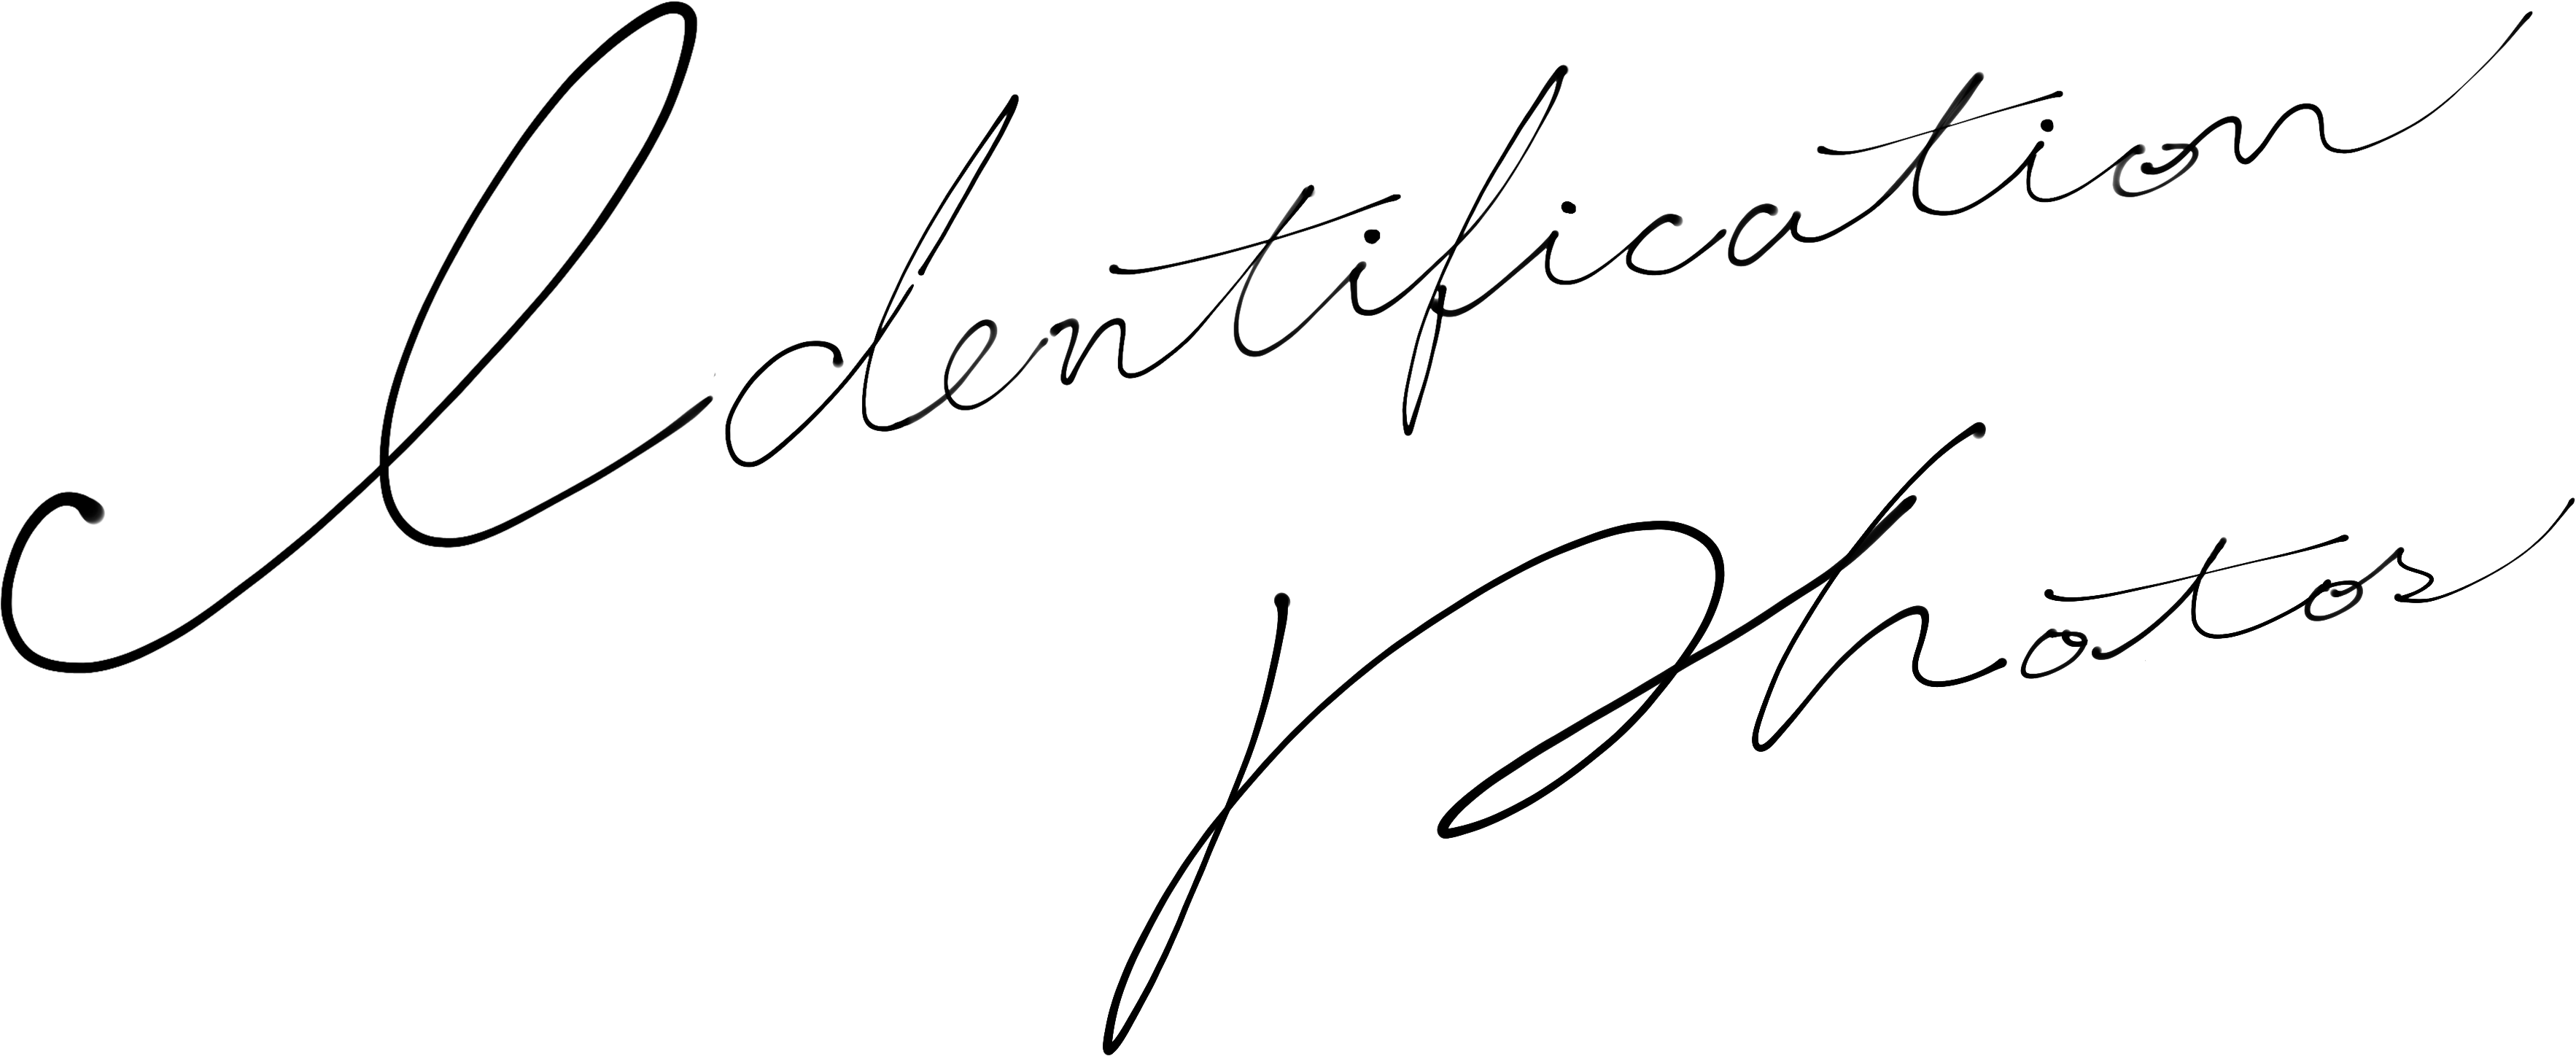 Identification Photos